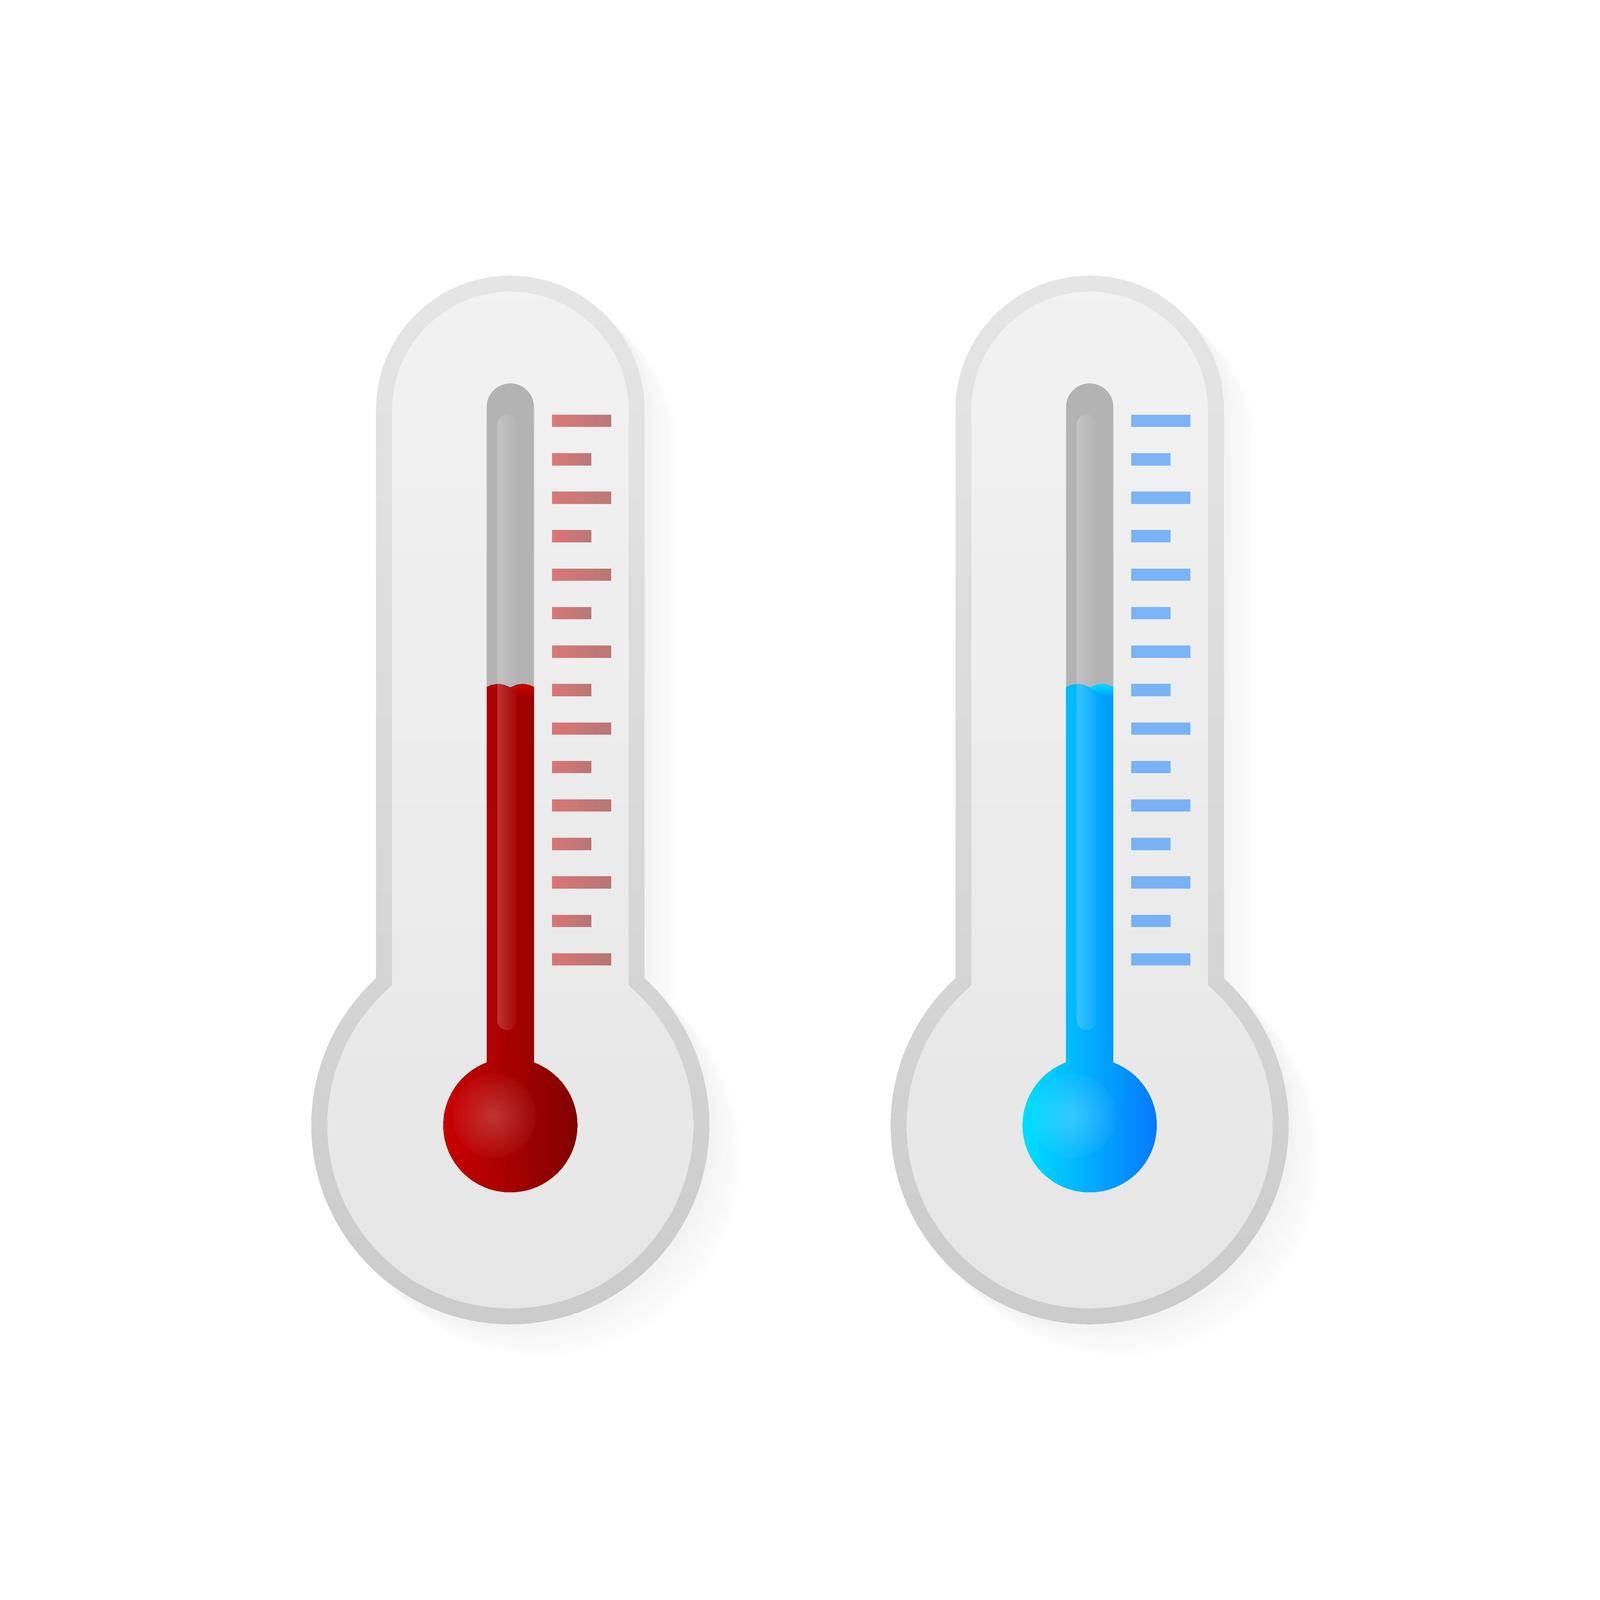 Linear measuring temperature for medical design. Vector logo.